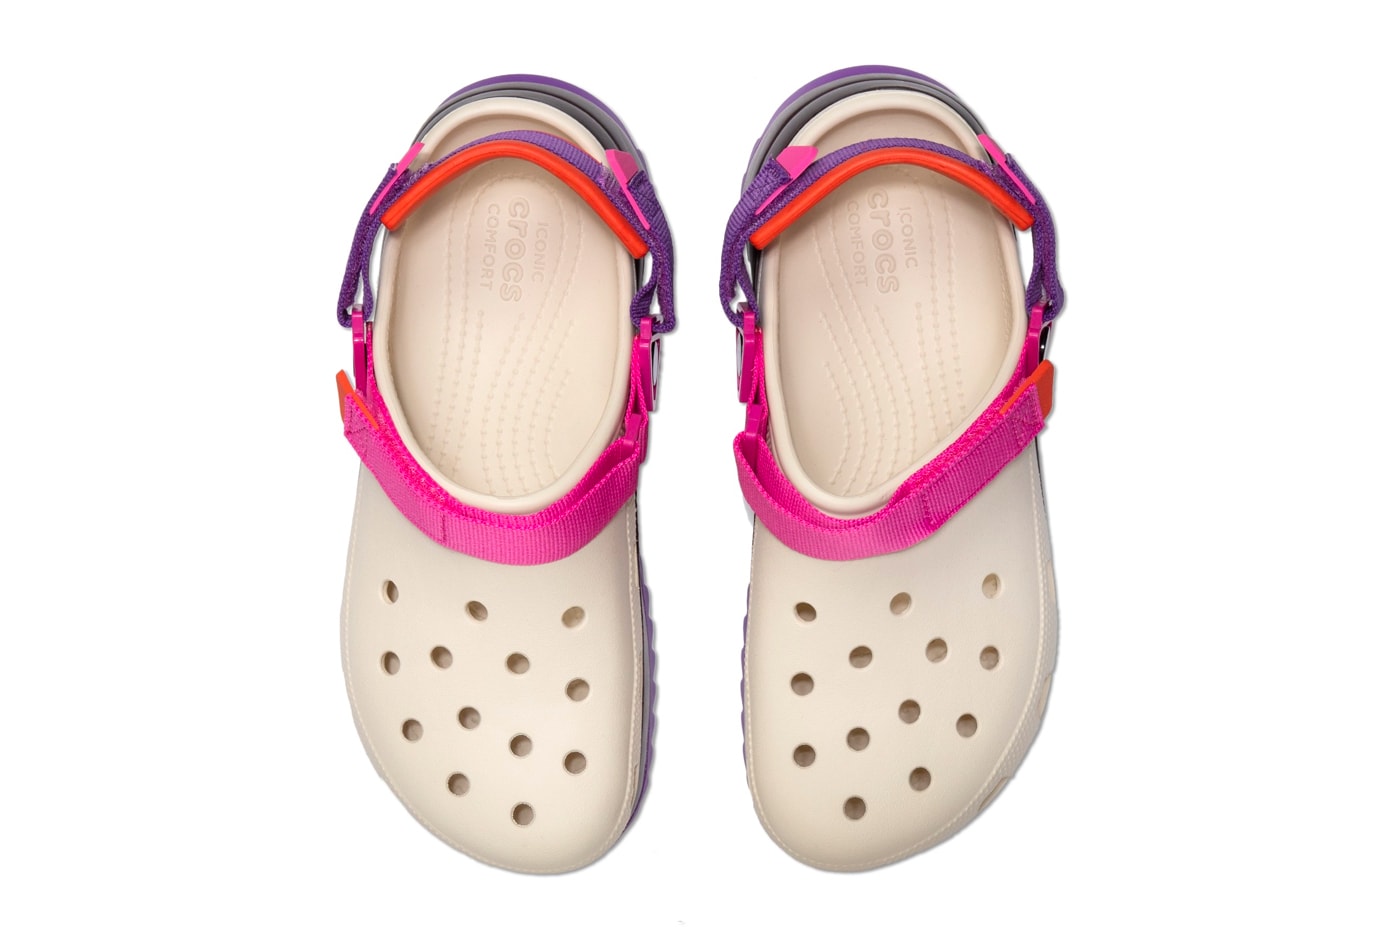 Crocs Classic Hiker Clog Release footwear sandals adjustable velcro straps sawtooth outsole black white hbx